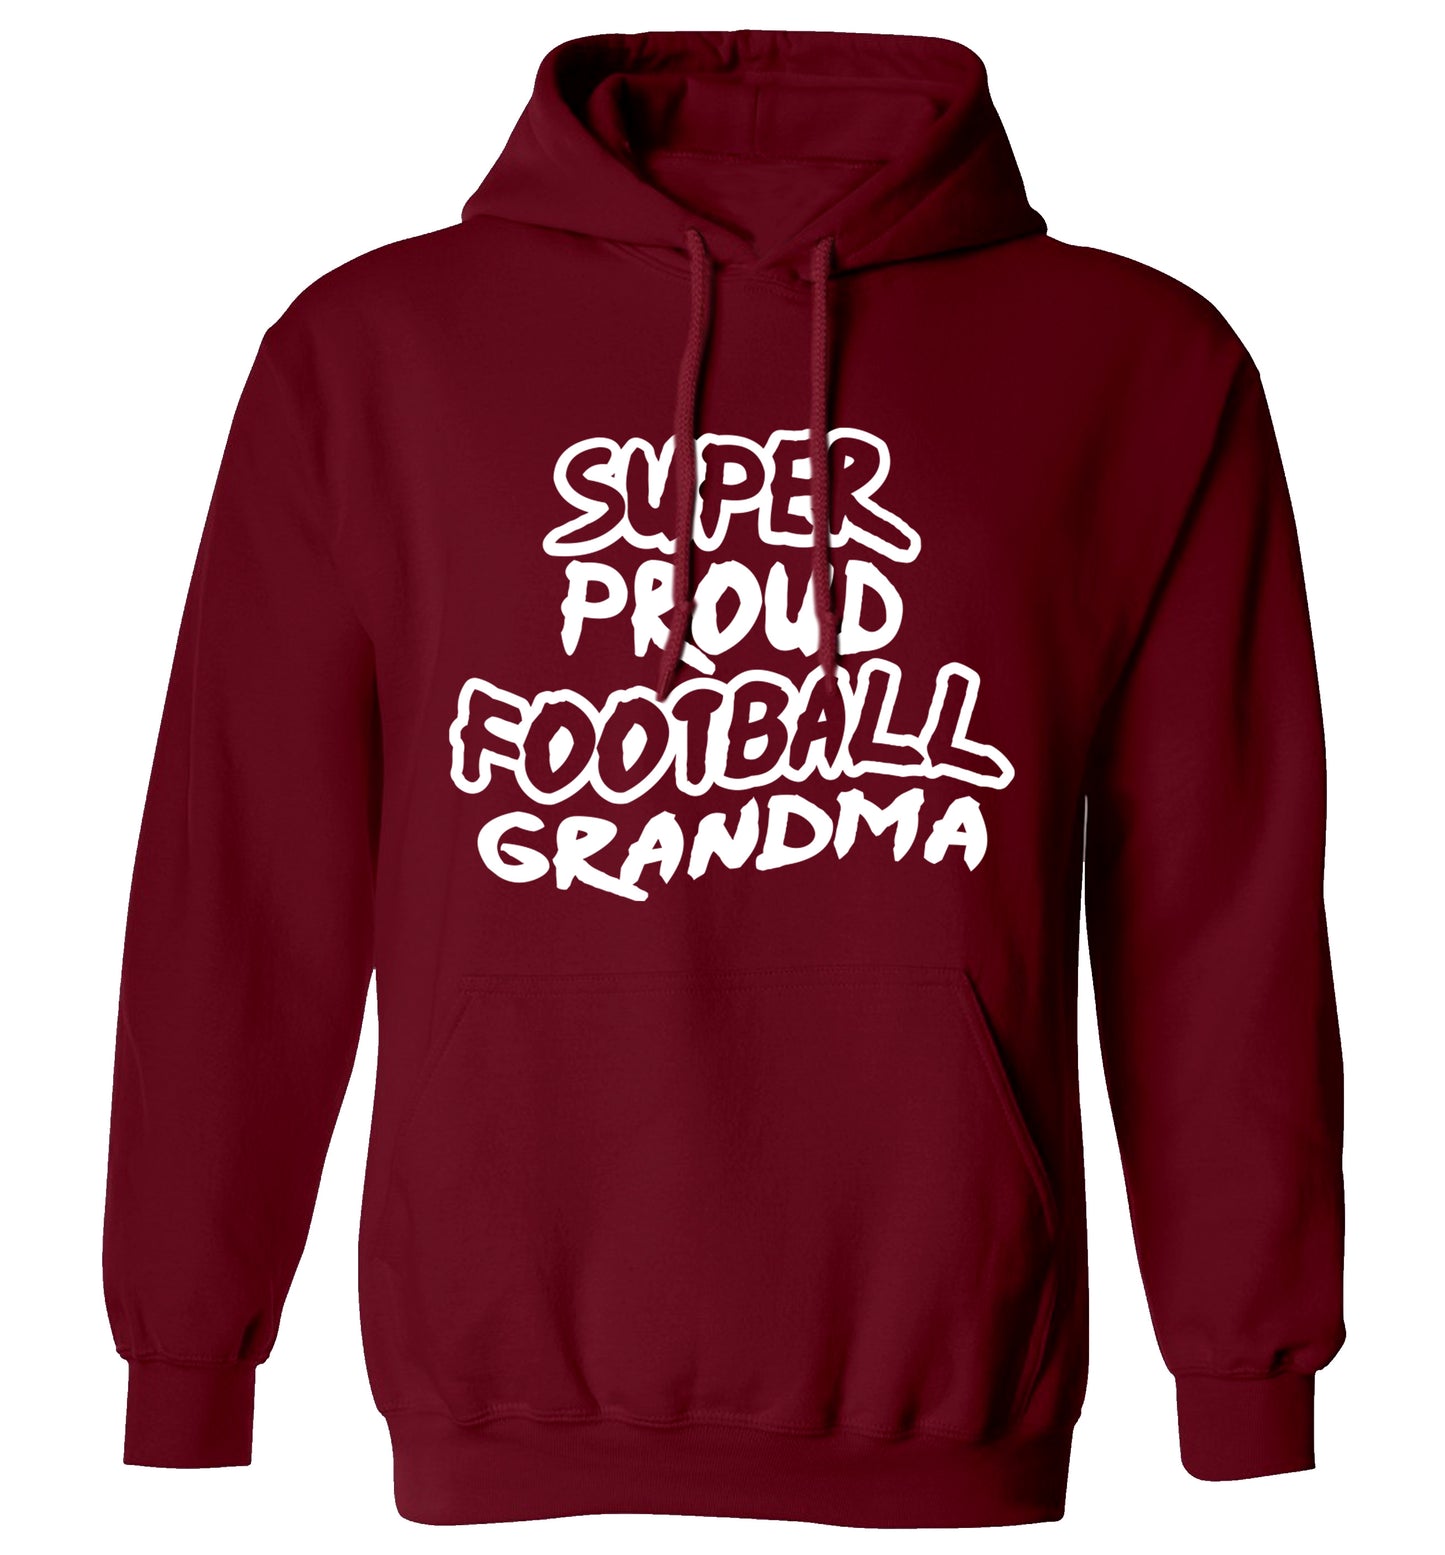 Super proud football grandma adults unisexmaroon hoodie 2XL